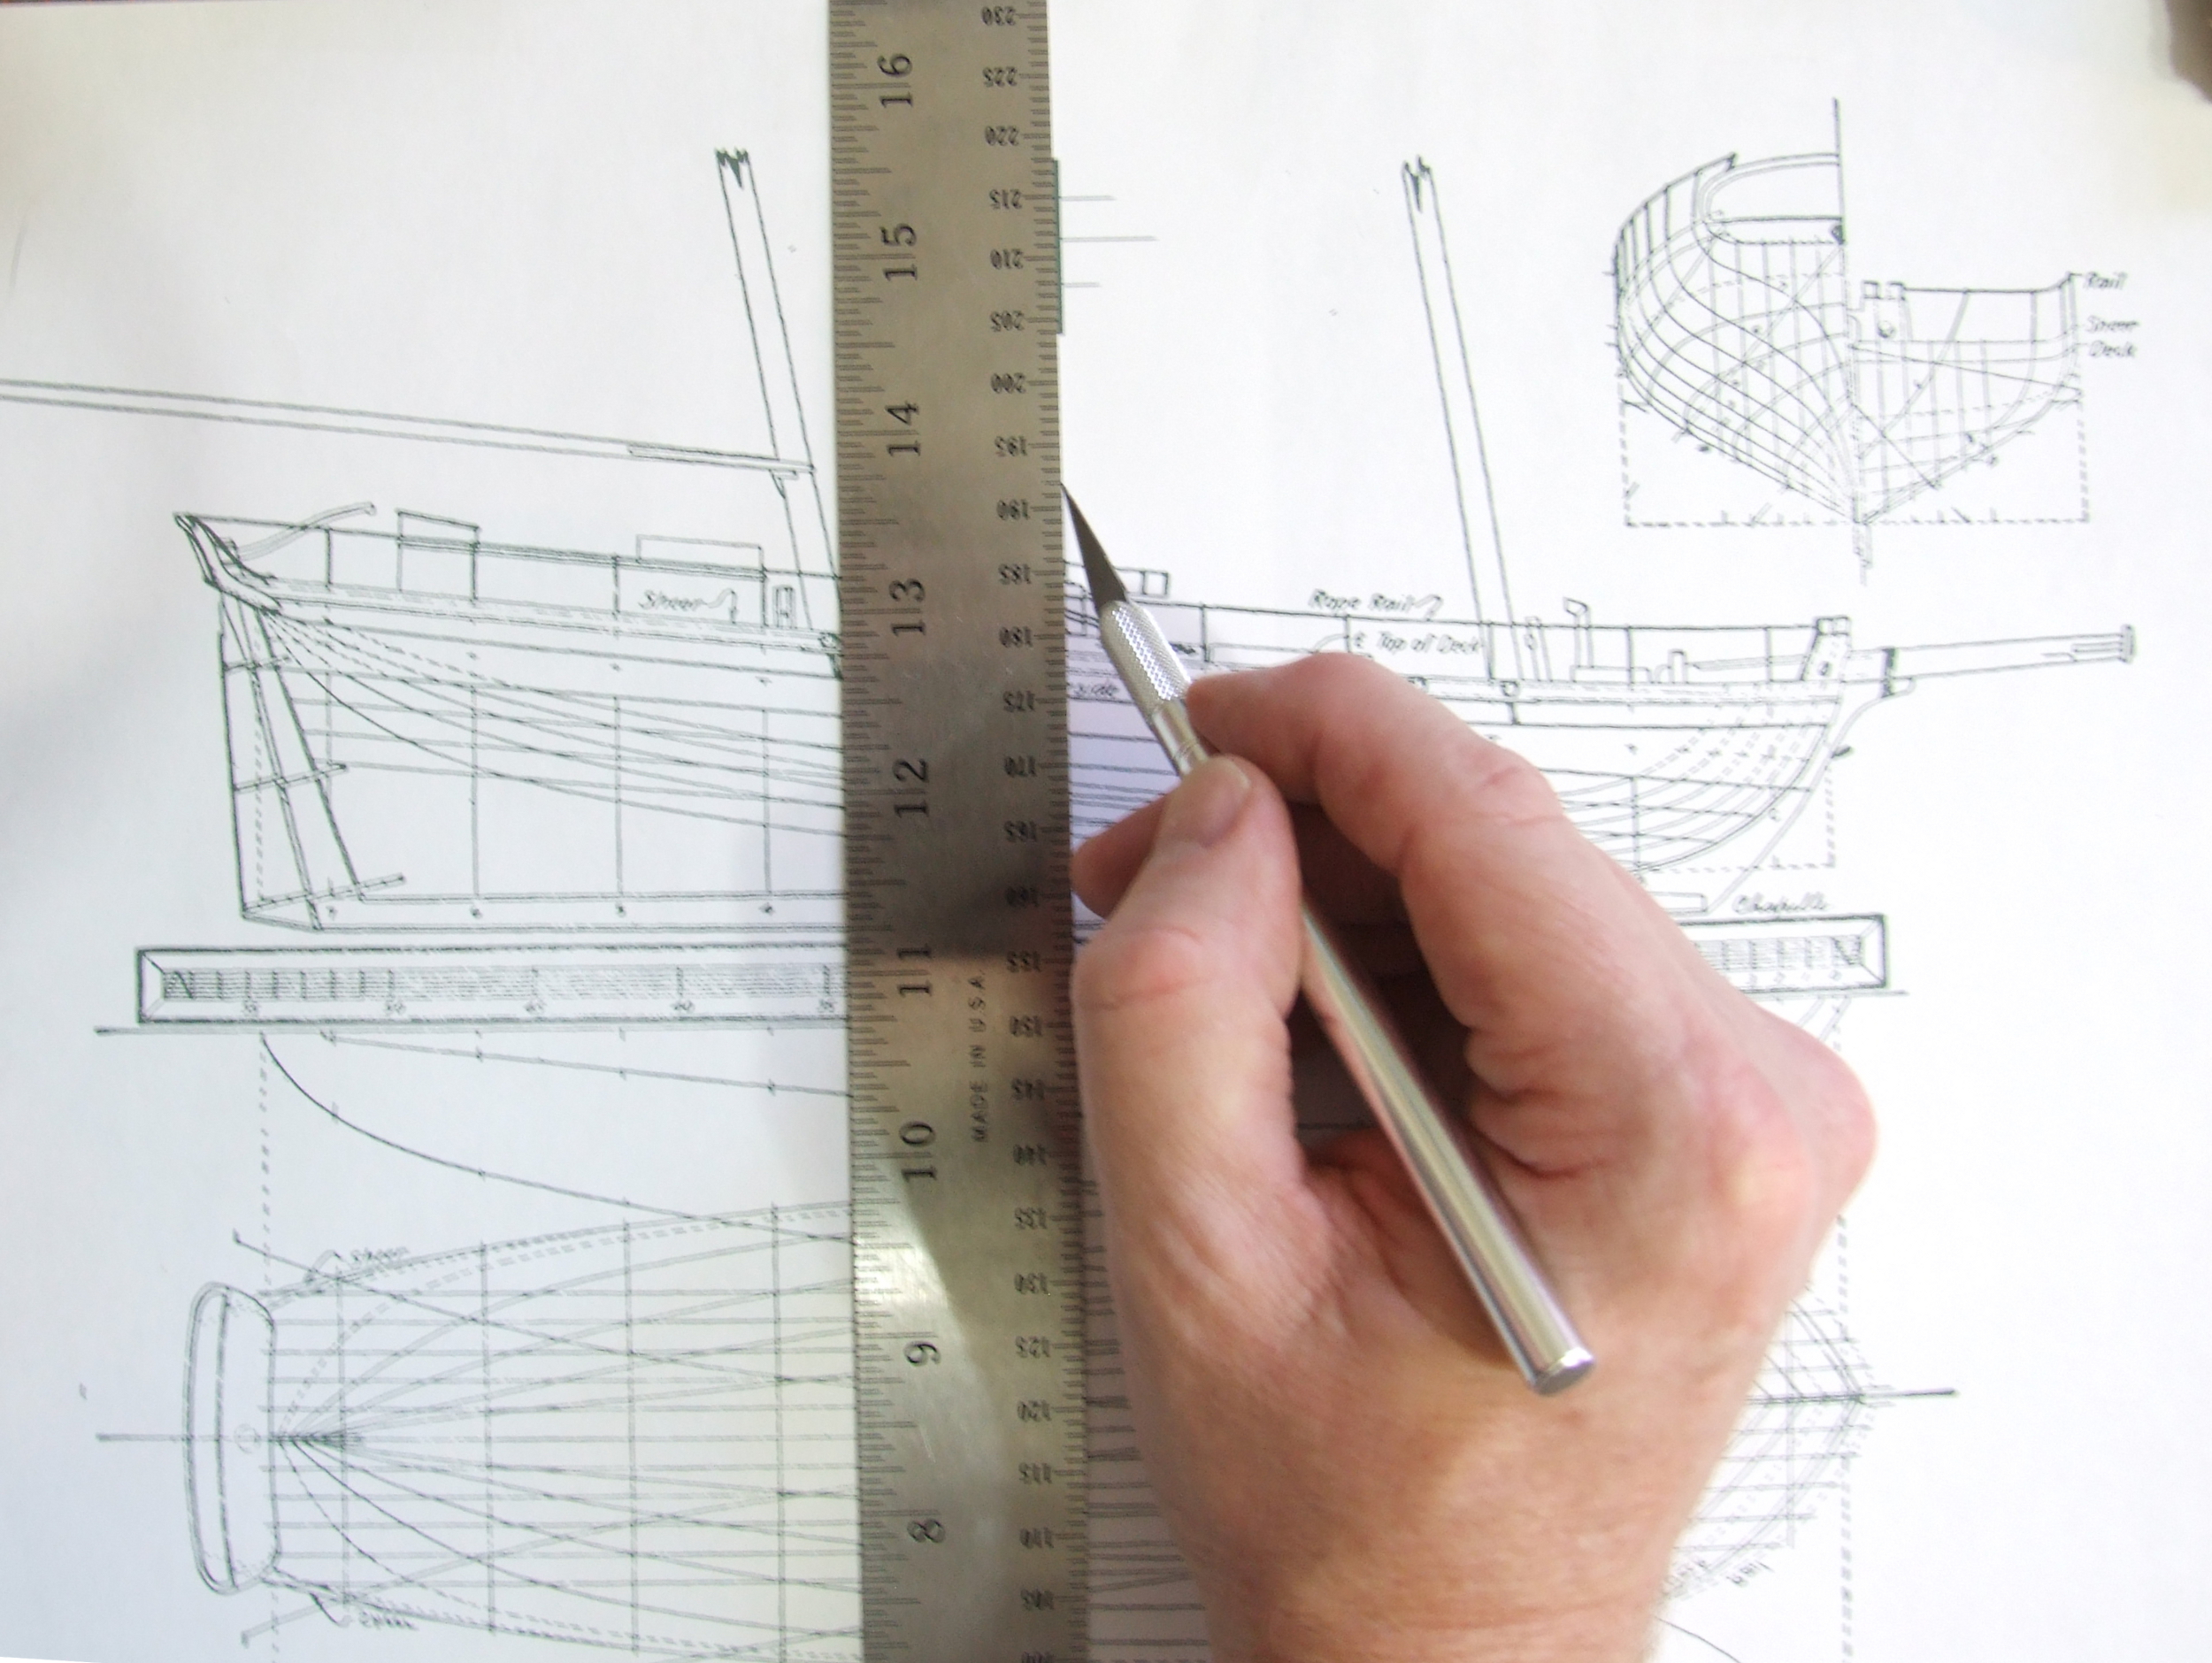 ... model I wood model ship plans made where one developed plans in